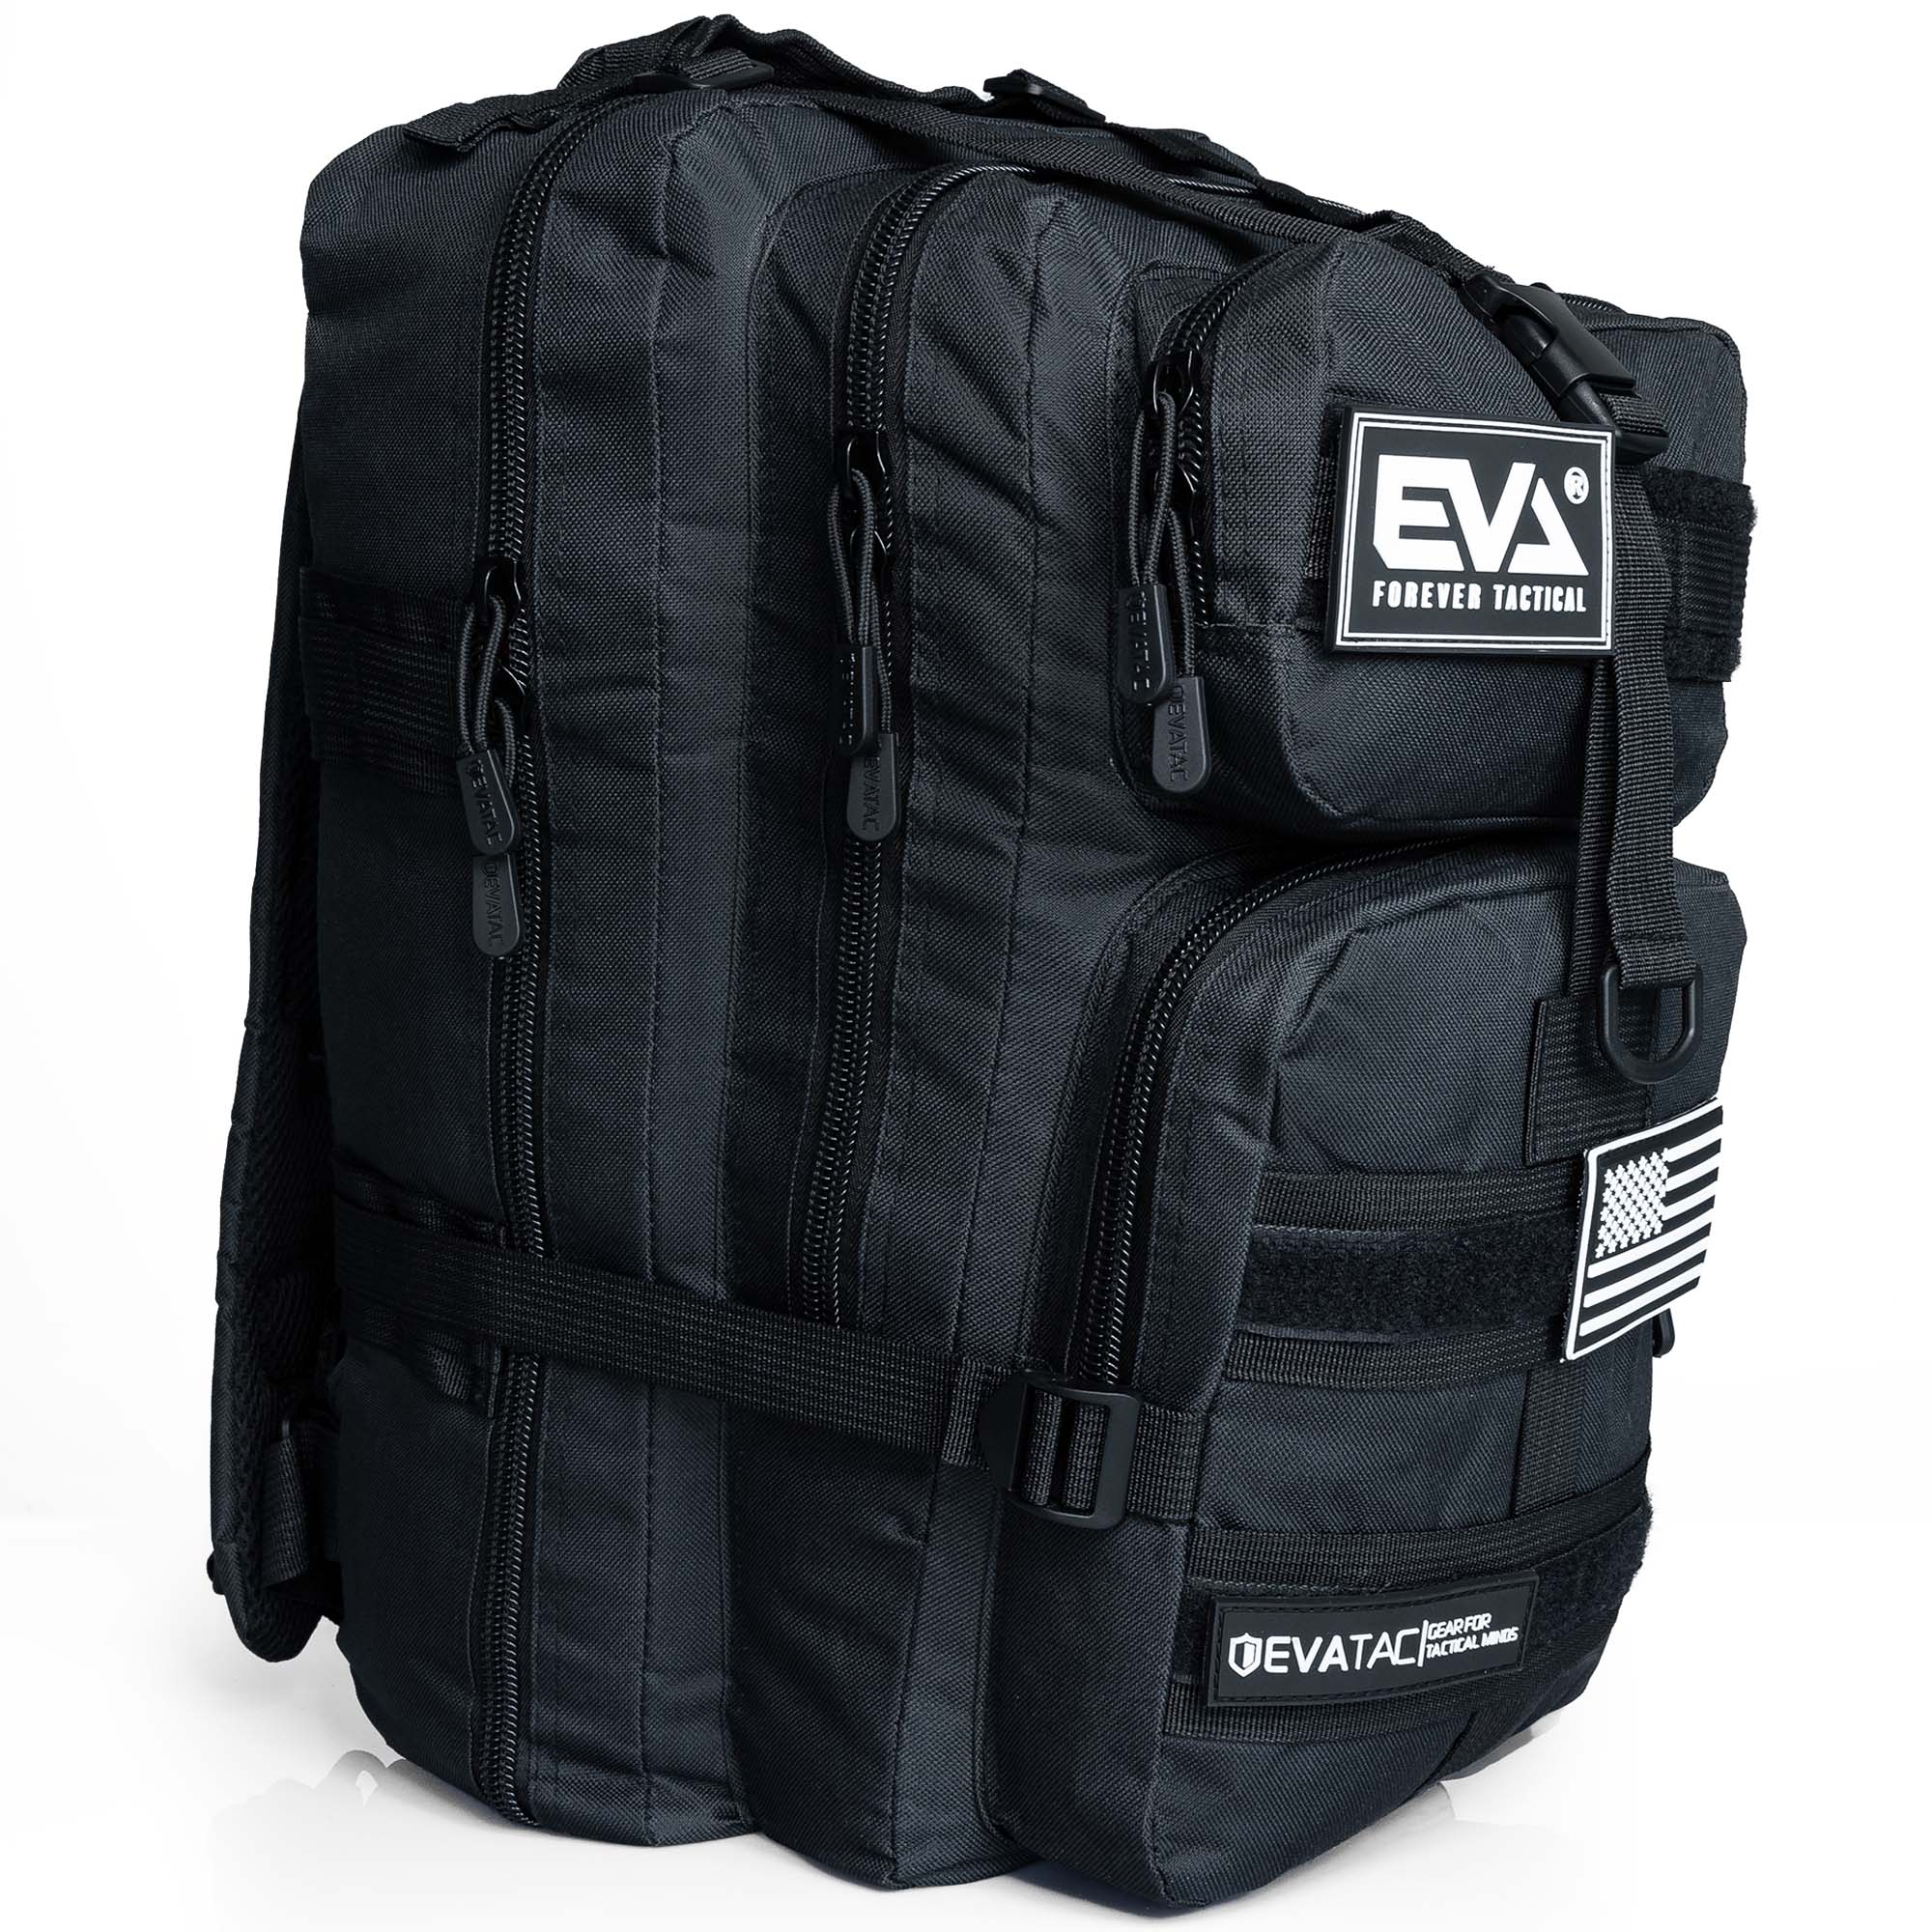 » STRIKE35 Backpack (100% off)